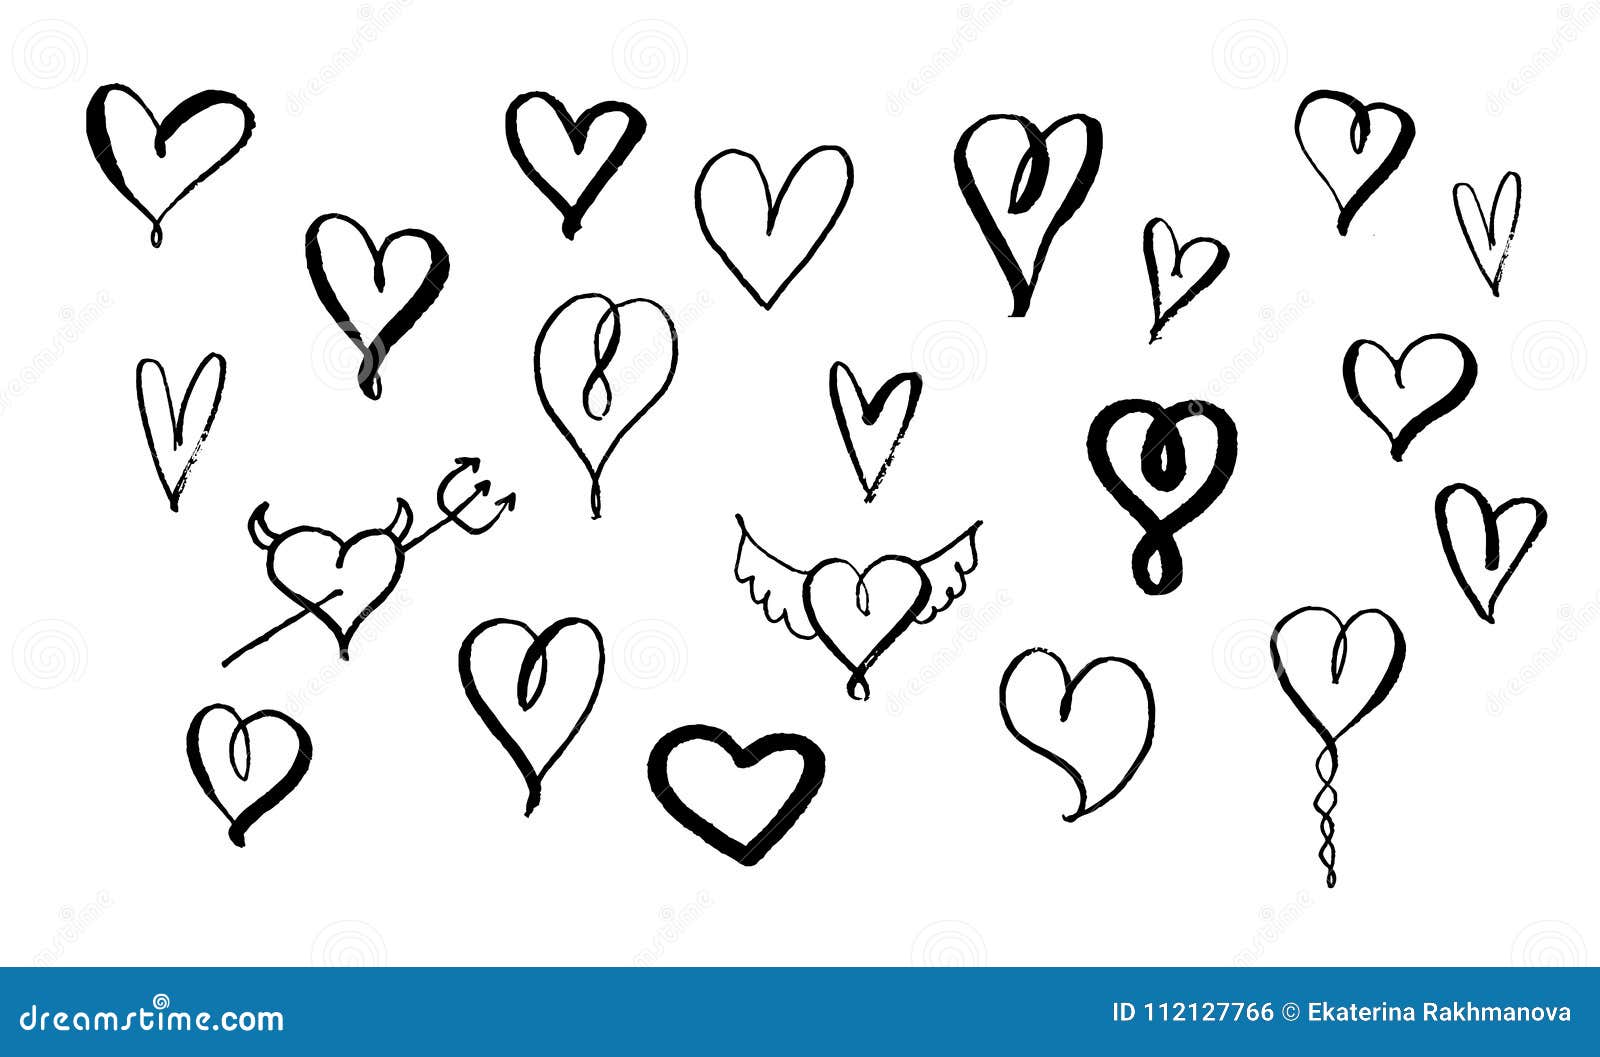 HOPE Aqua Ballpoint Pen Calligraphy Love Heart  #208136 